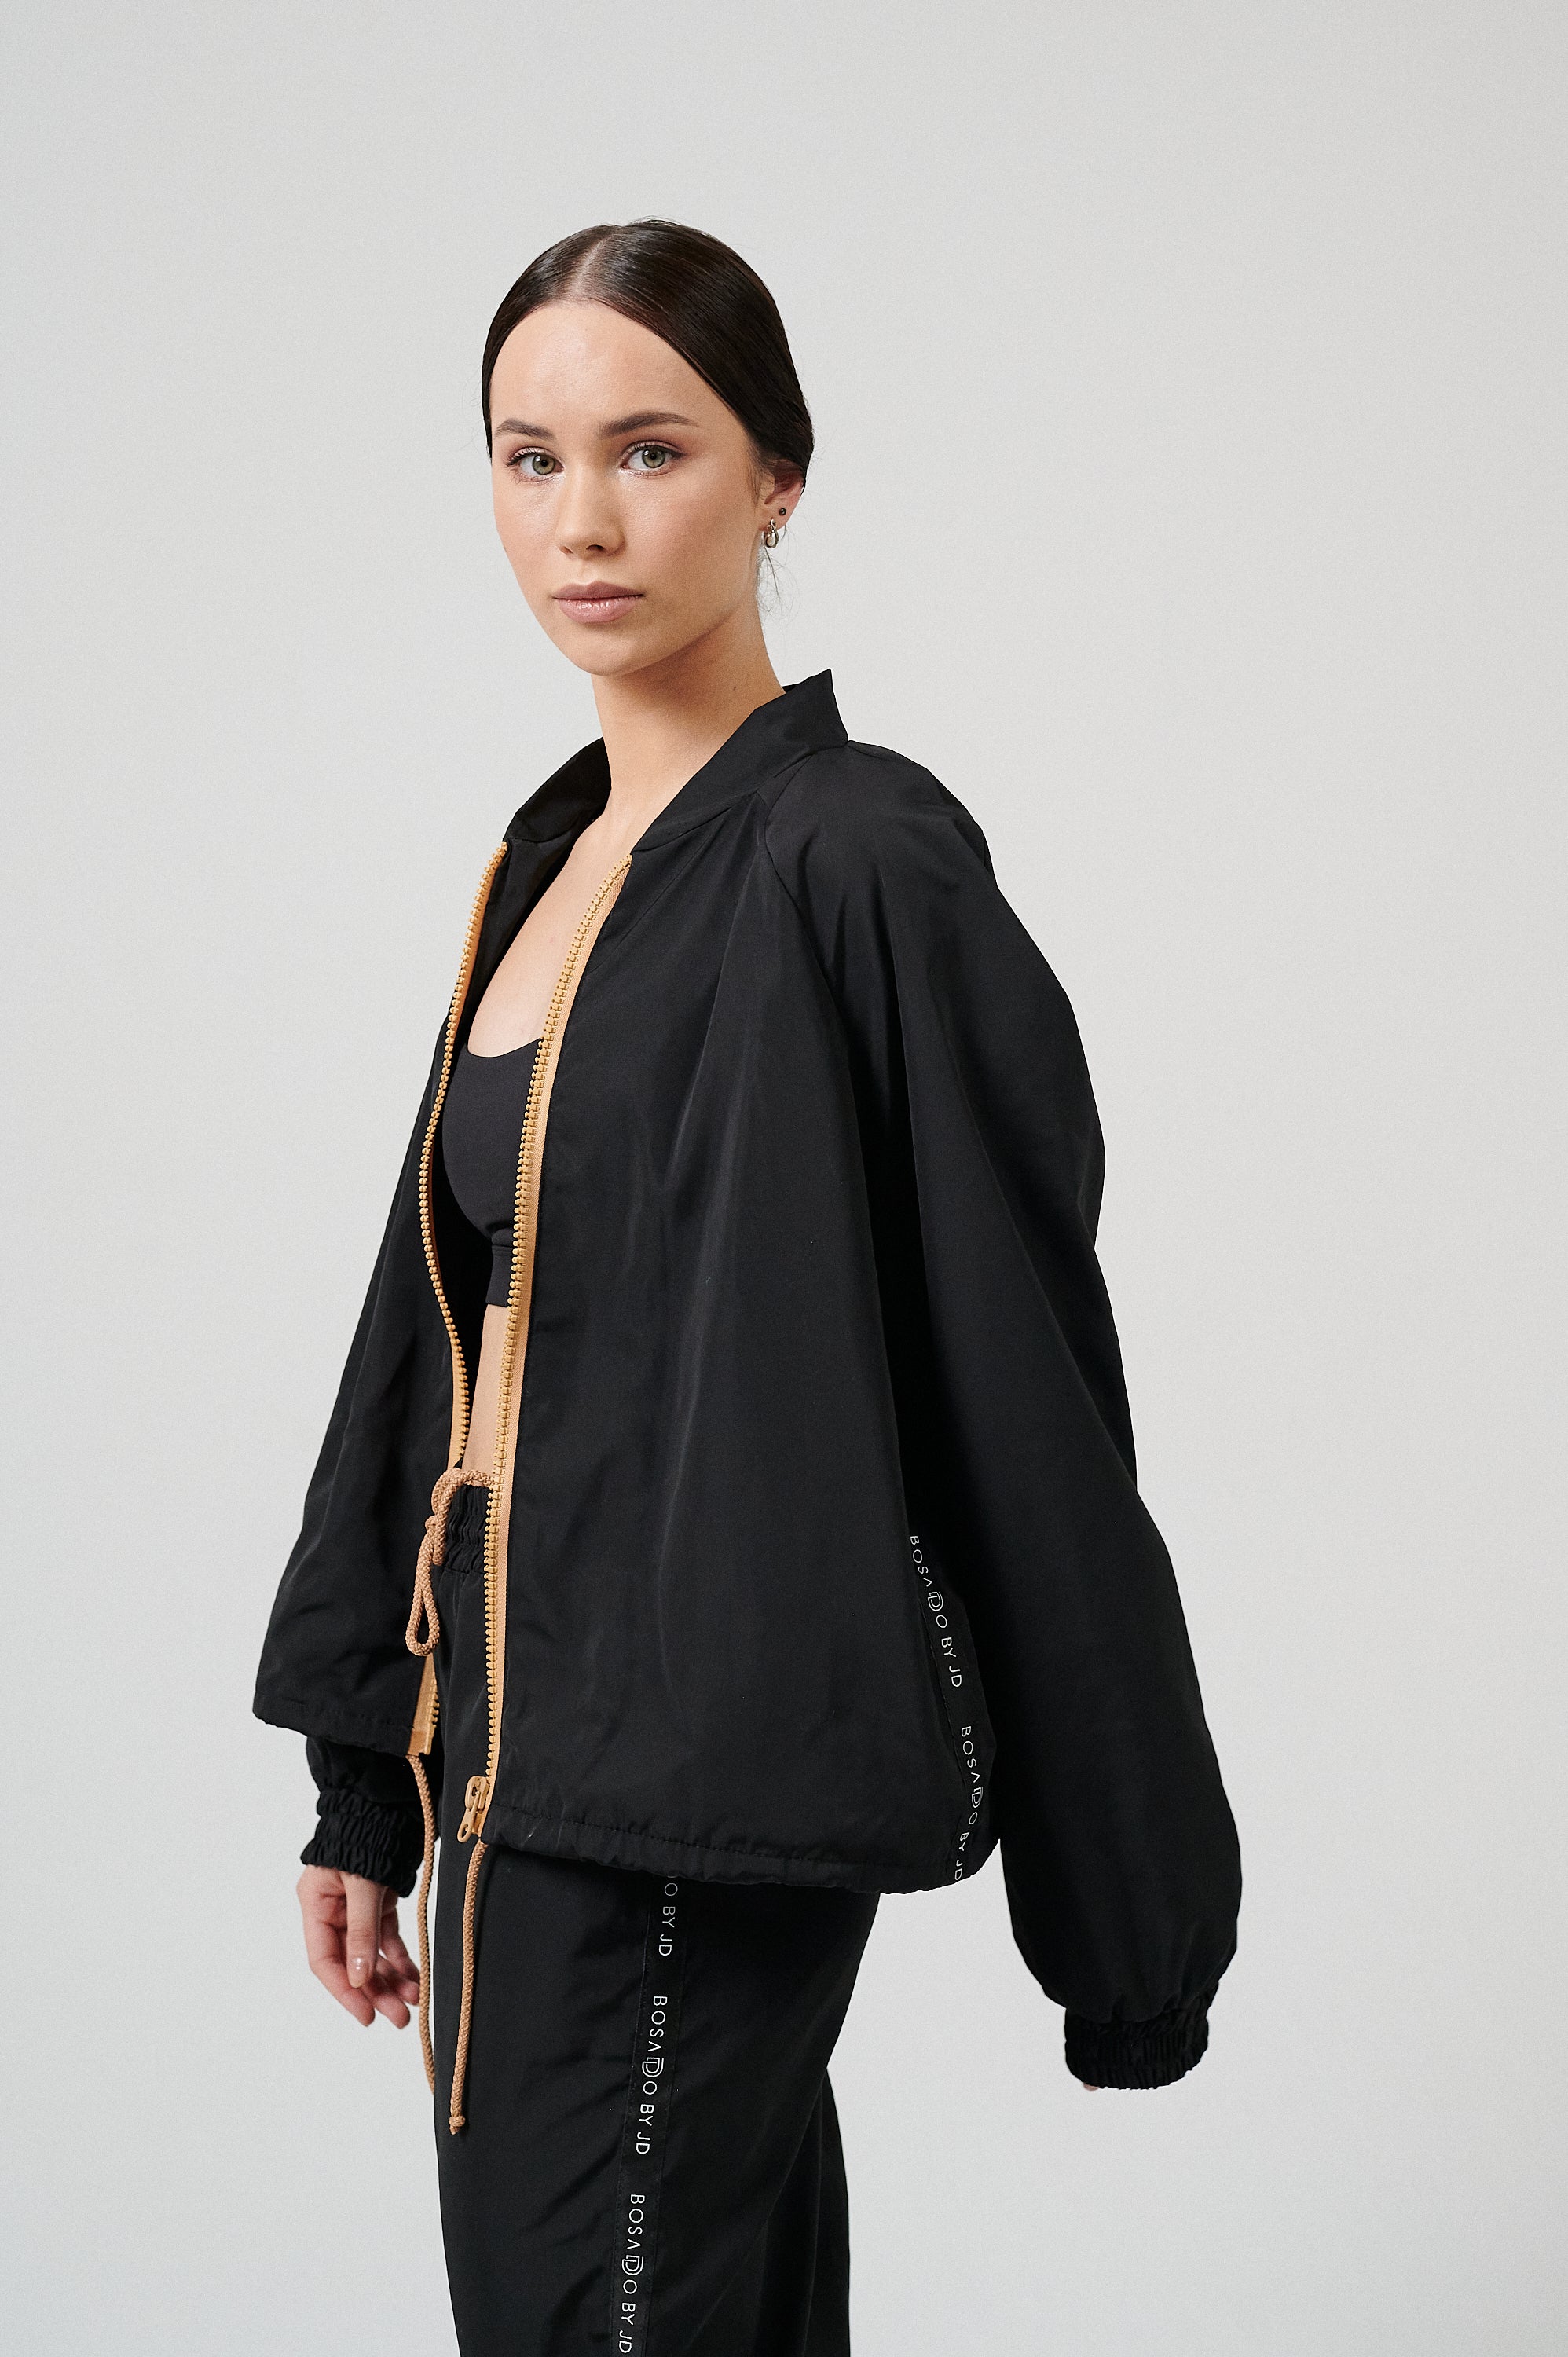 Bosaddo by Jurgita Dronina collection | black jacket